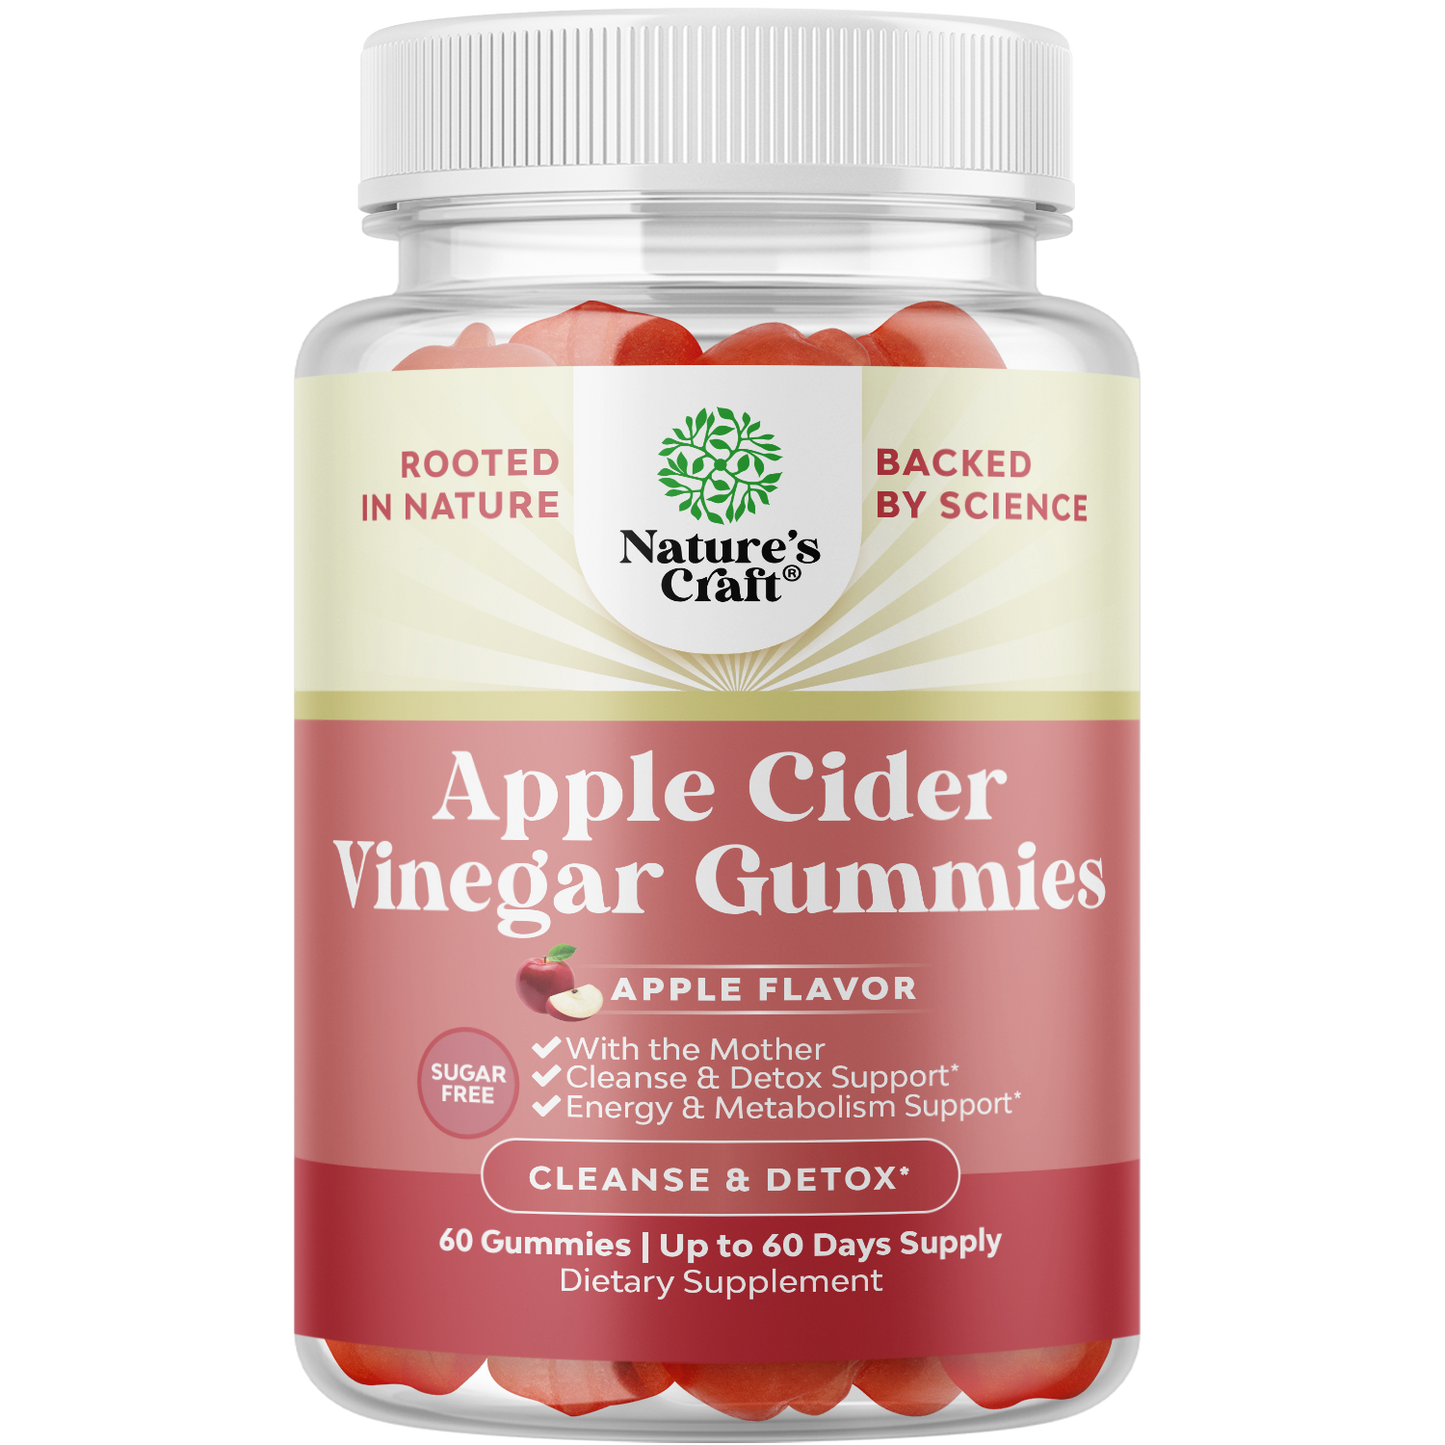 Apple Cider Vinegar Gummies Sugar Free - 60 Gummies - Nature's Craft